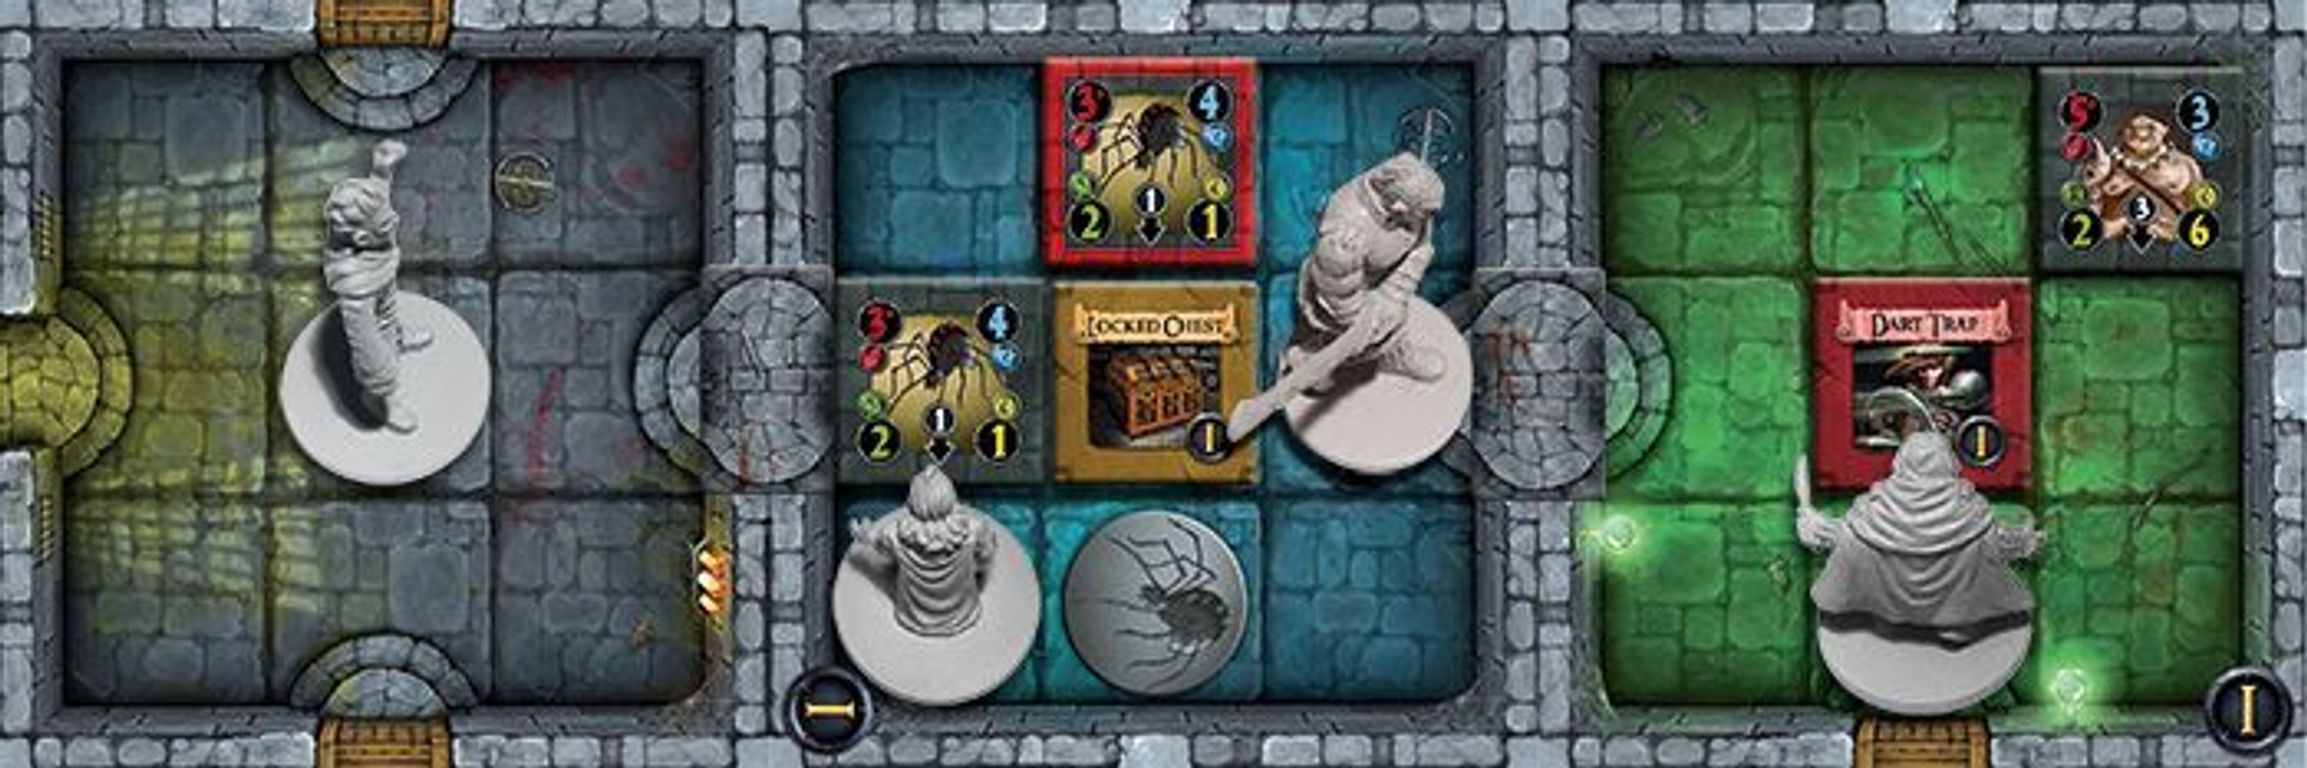 Dungeon Alliance game board